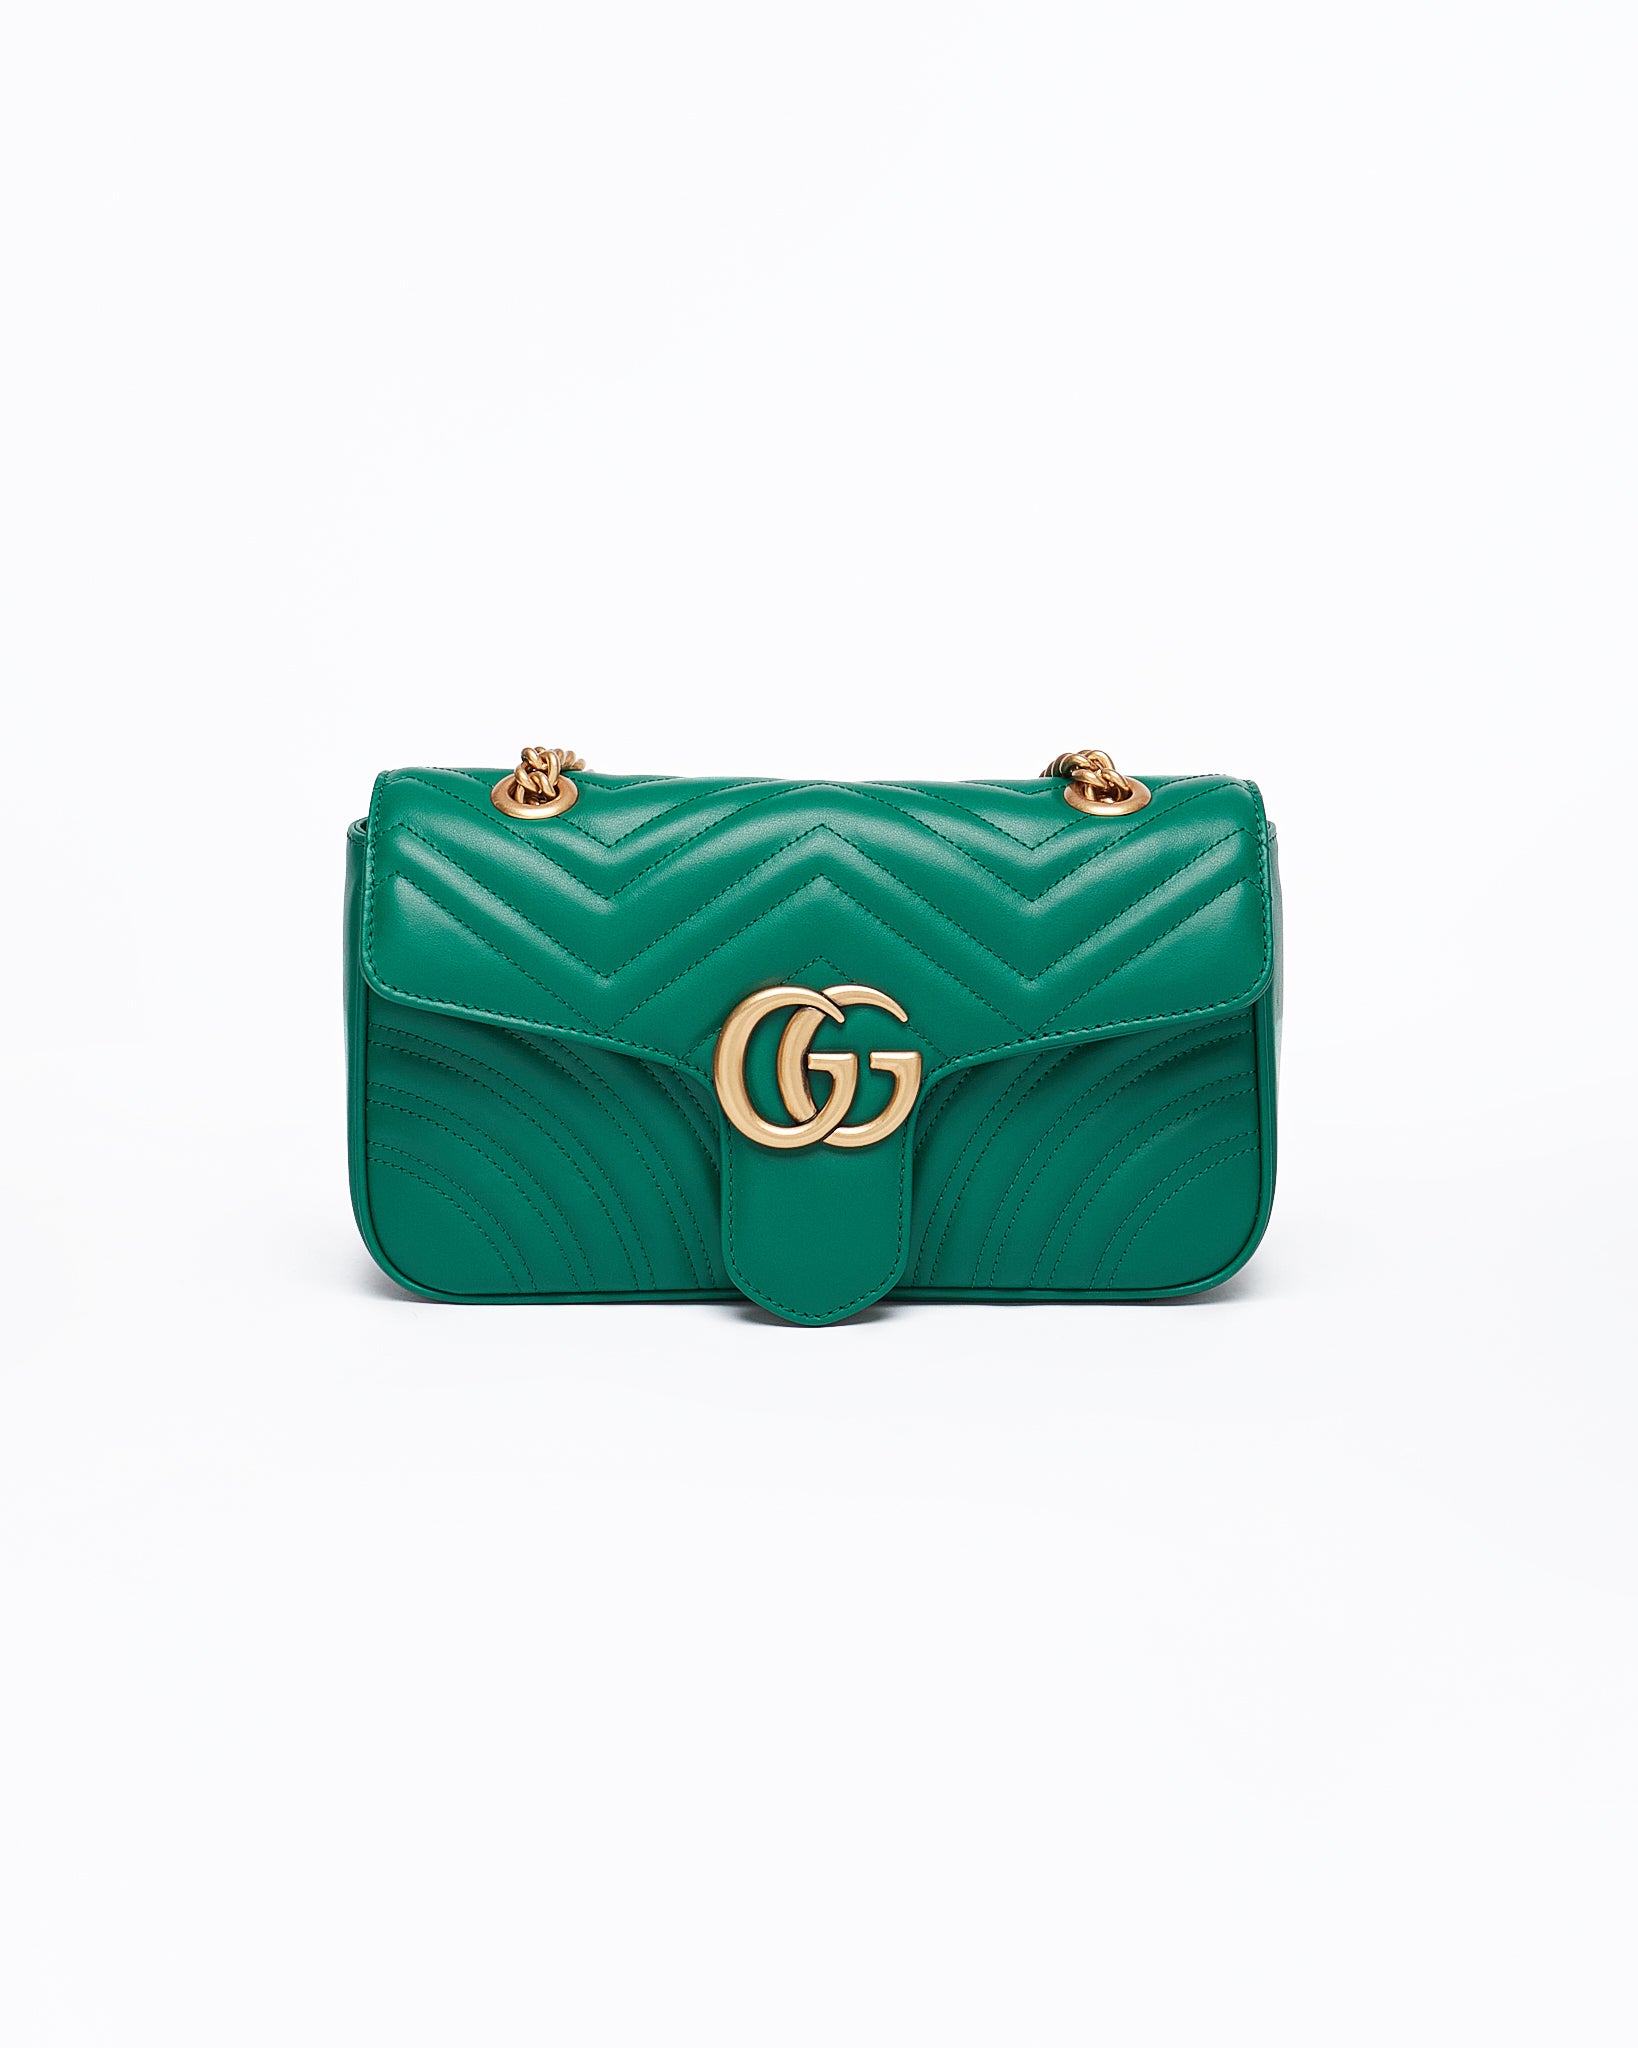 GUC Marmont Lady Green Shoulder Bag 185